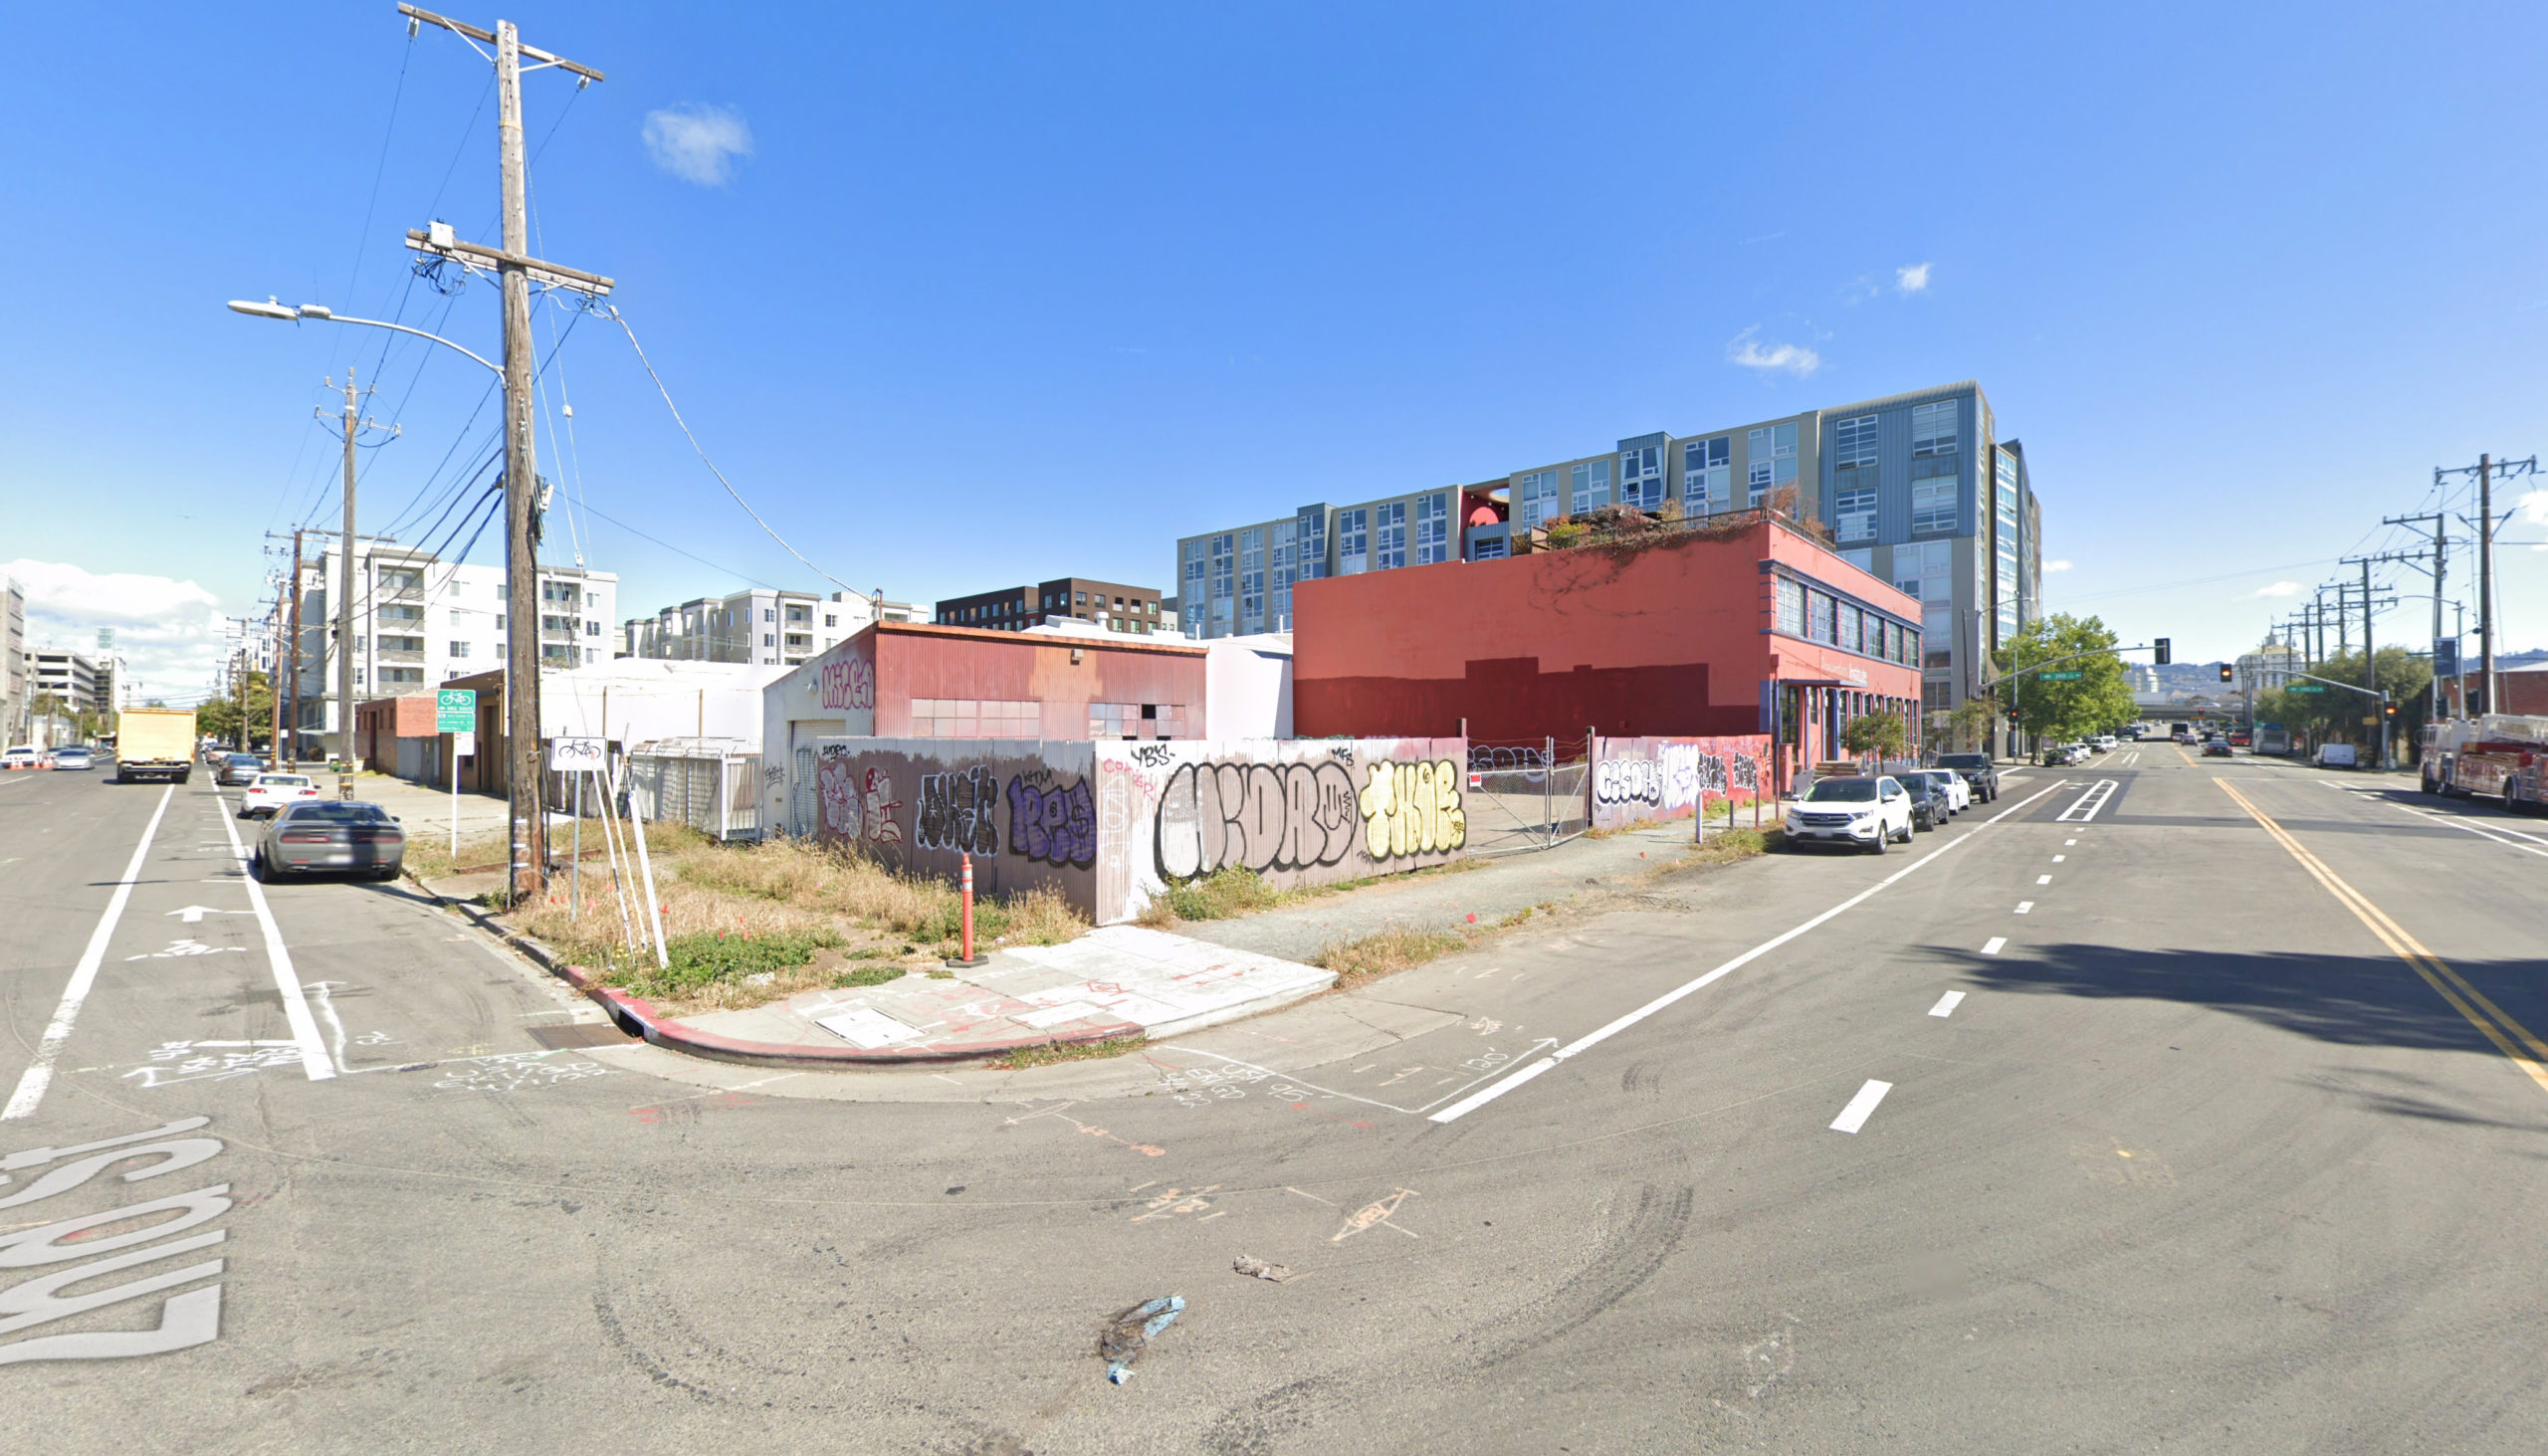 100 2nd Street, image via Google Street View